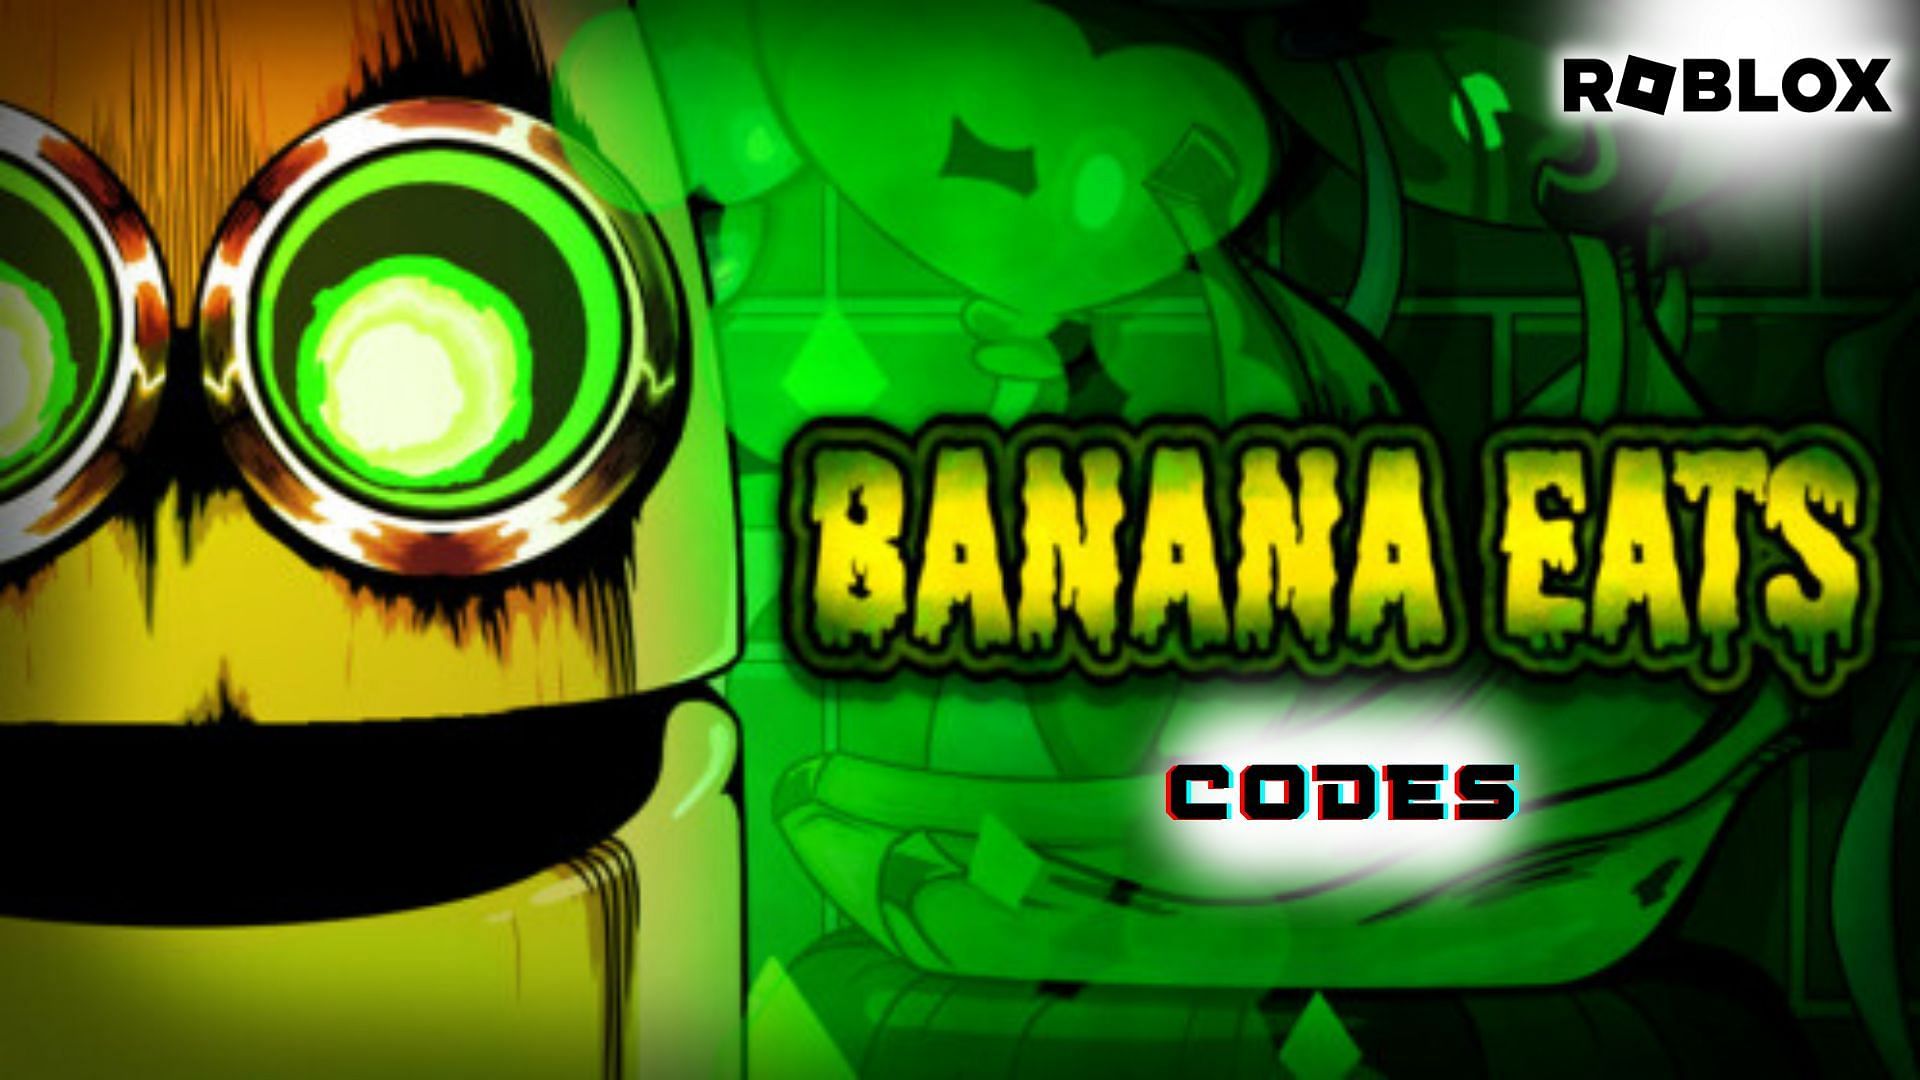 Banana Eats latest codes